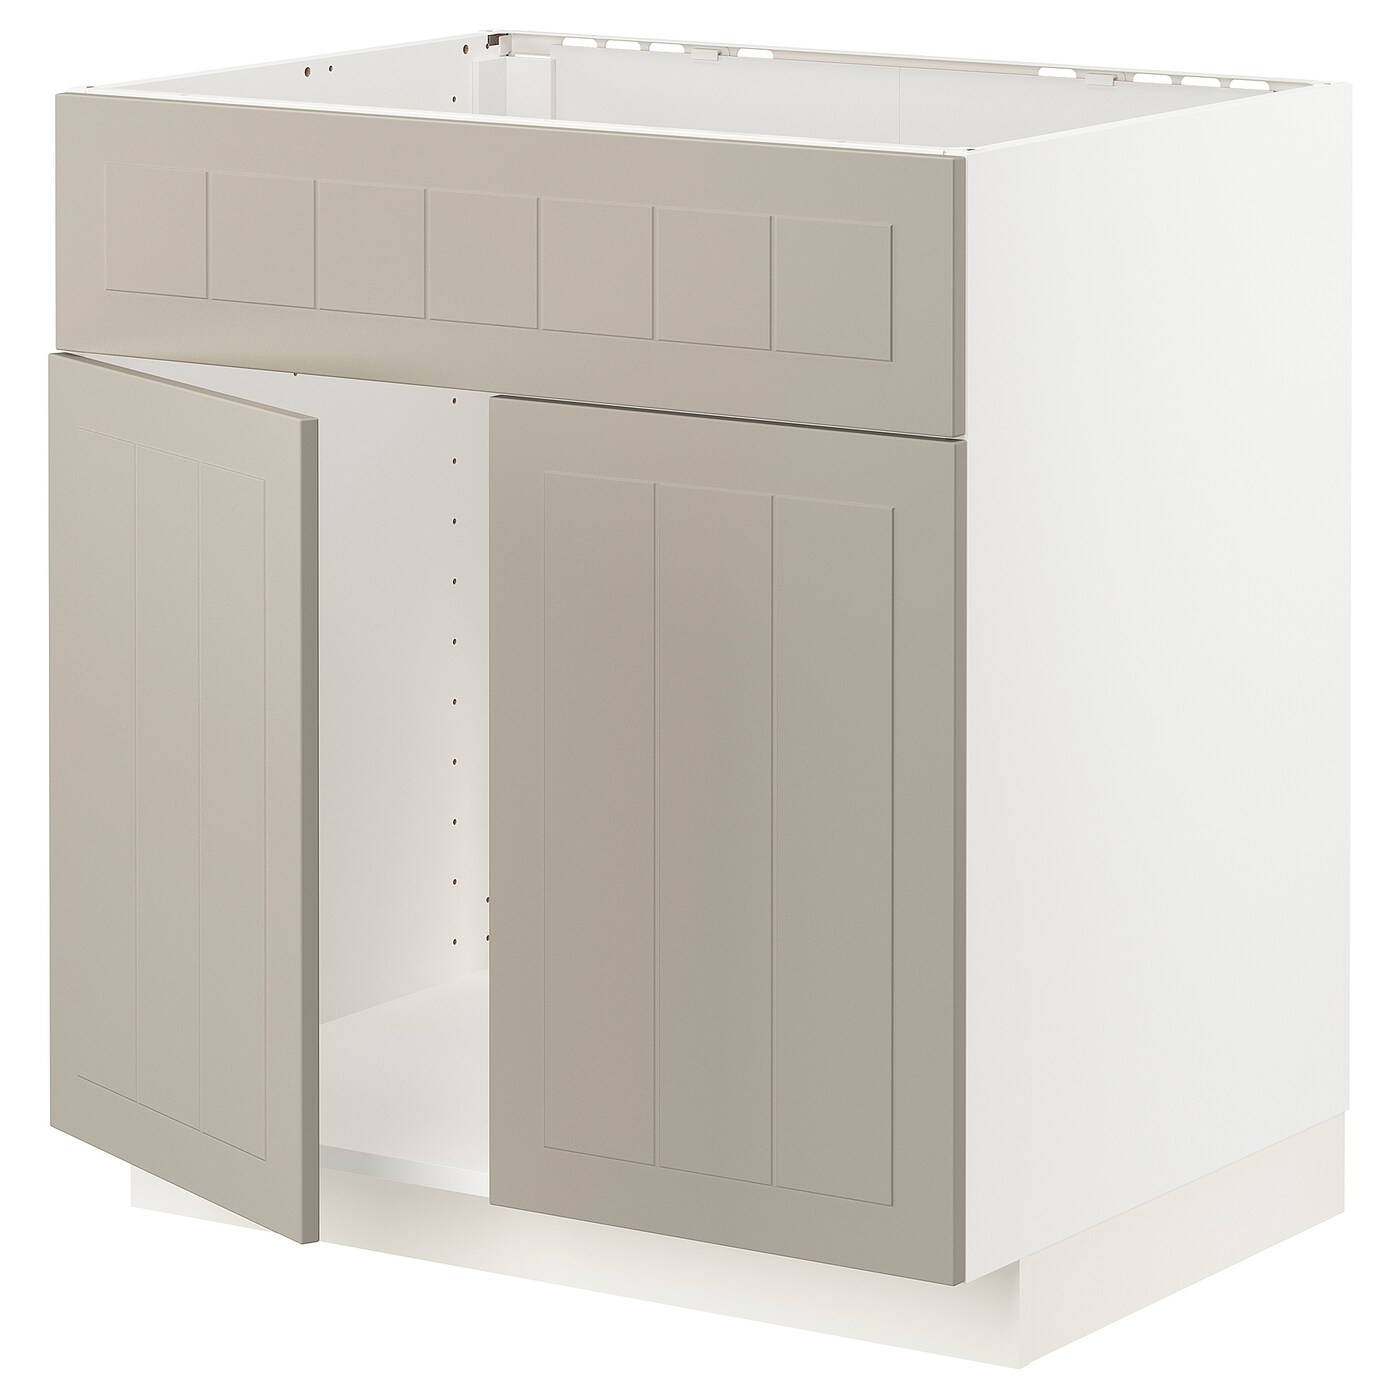 Напольный шкаф - METOD IKEA/ МЕТОД ИКЕА,  88х80 см, белый/бежевый